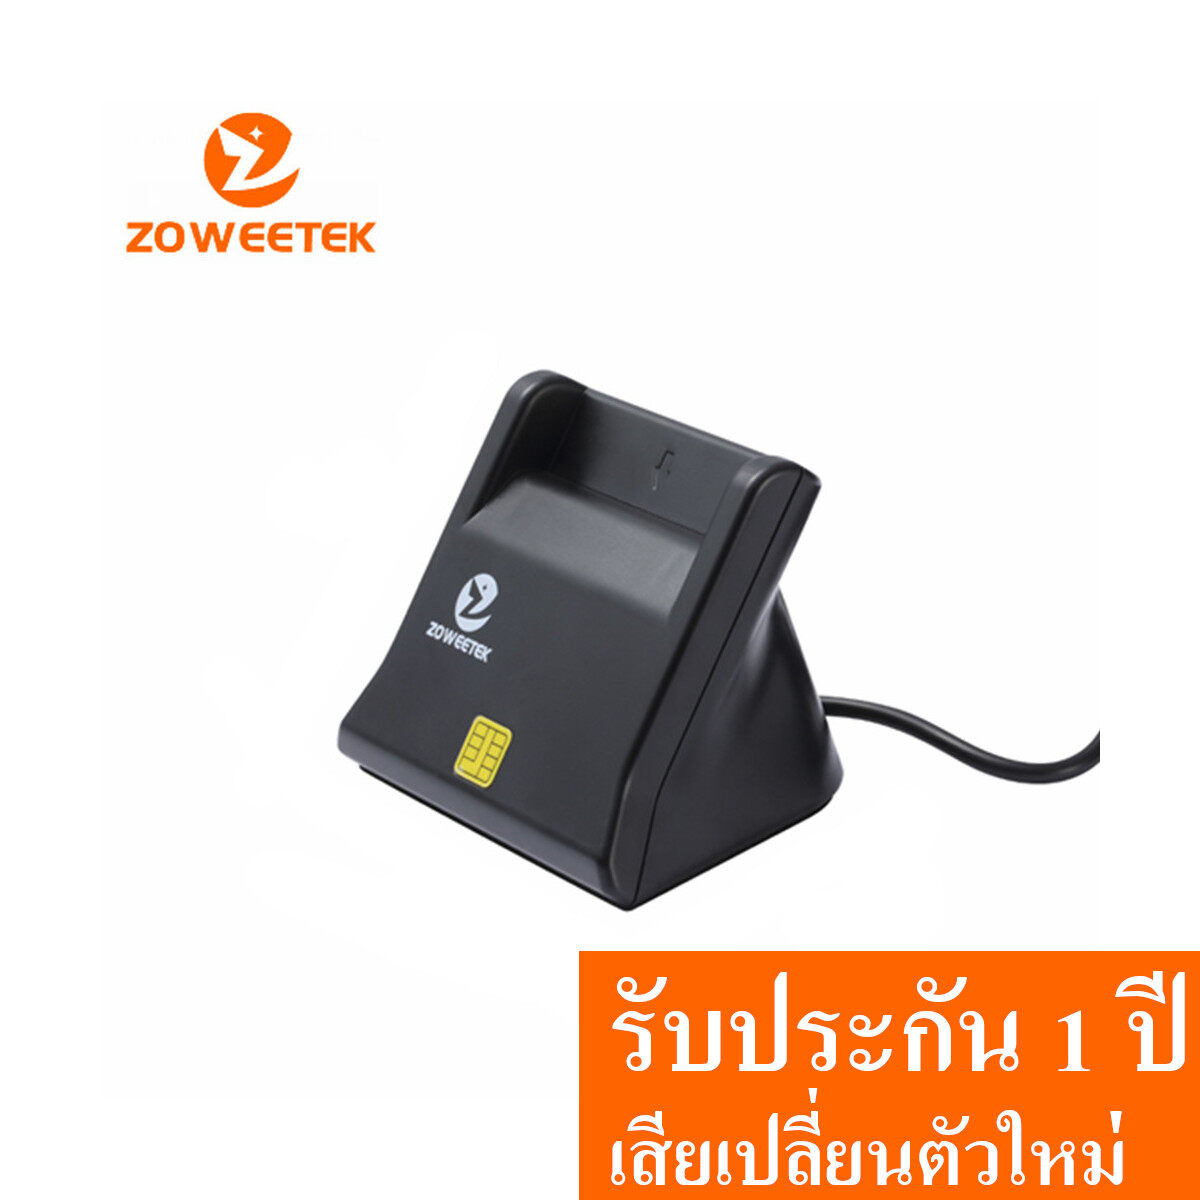 ZOWEETEK เครื่องอ่านบัตรประชาชน Smart Card Reader รุ่น ZW-12026-3 ประกัน 1 ปี